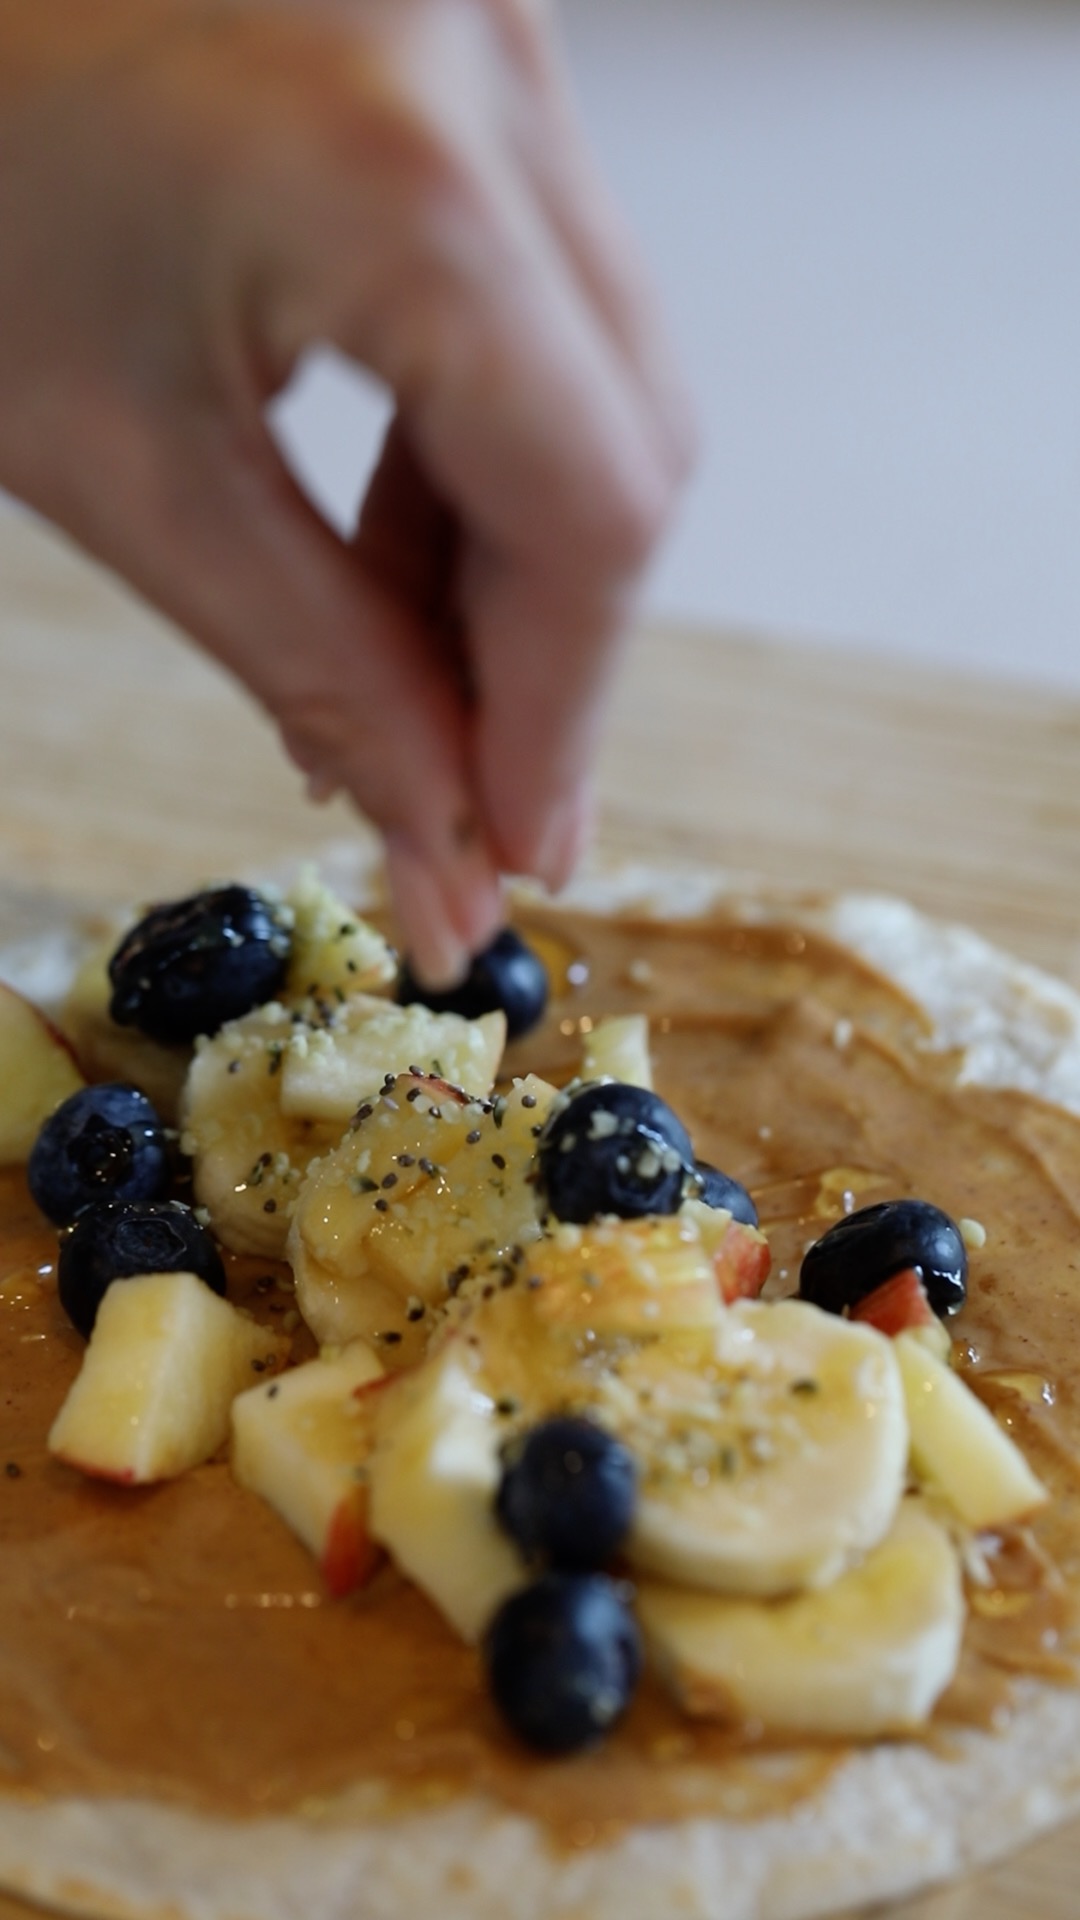 vegan wrap fruit breakfast tacos by angela lanter lifestyle blogger